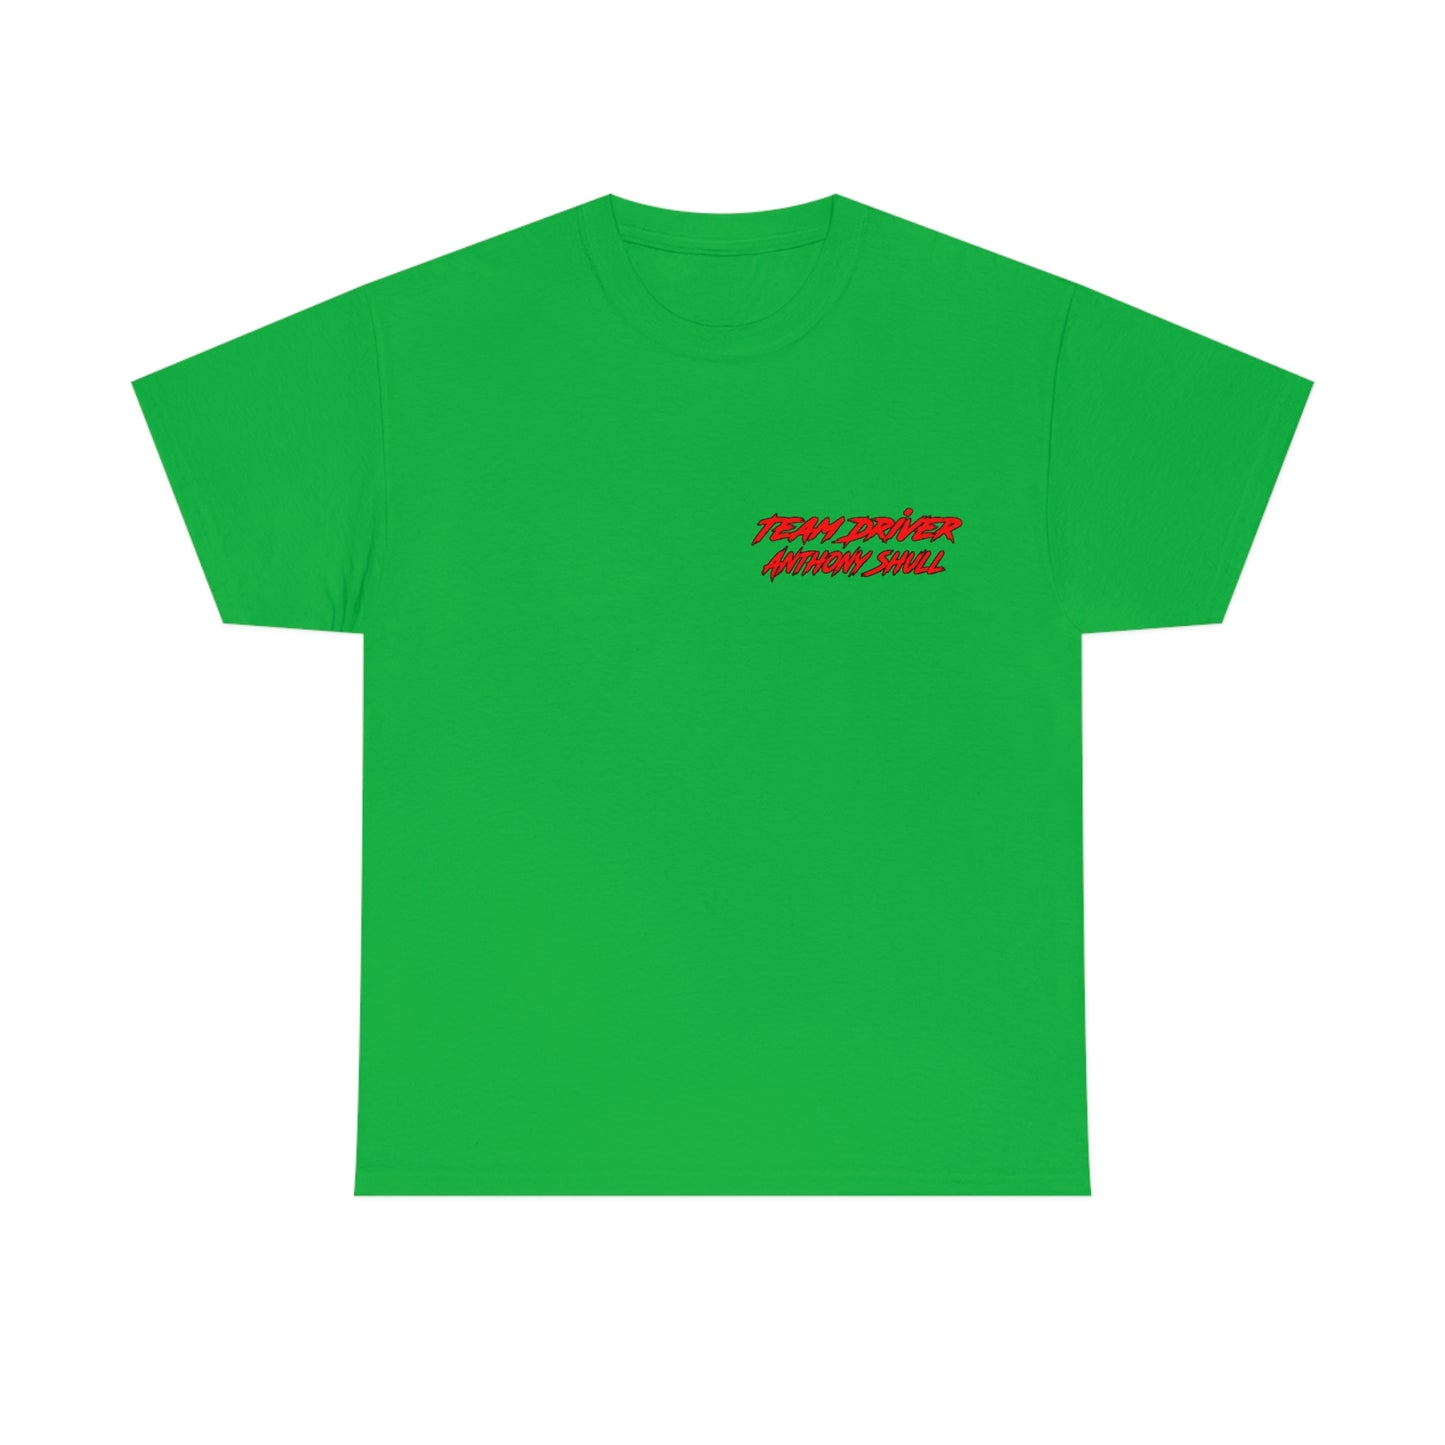 Team Driver Anthony Shull  Front Back DinoRc Logo T-Shirt S-5x Black Green